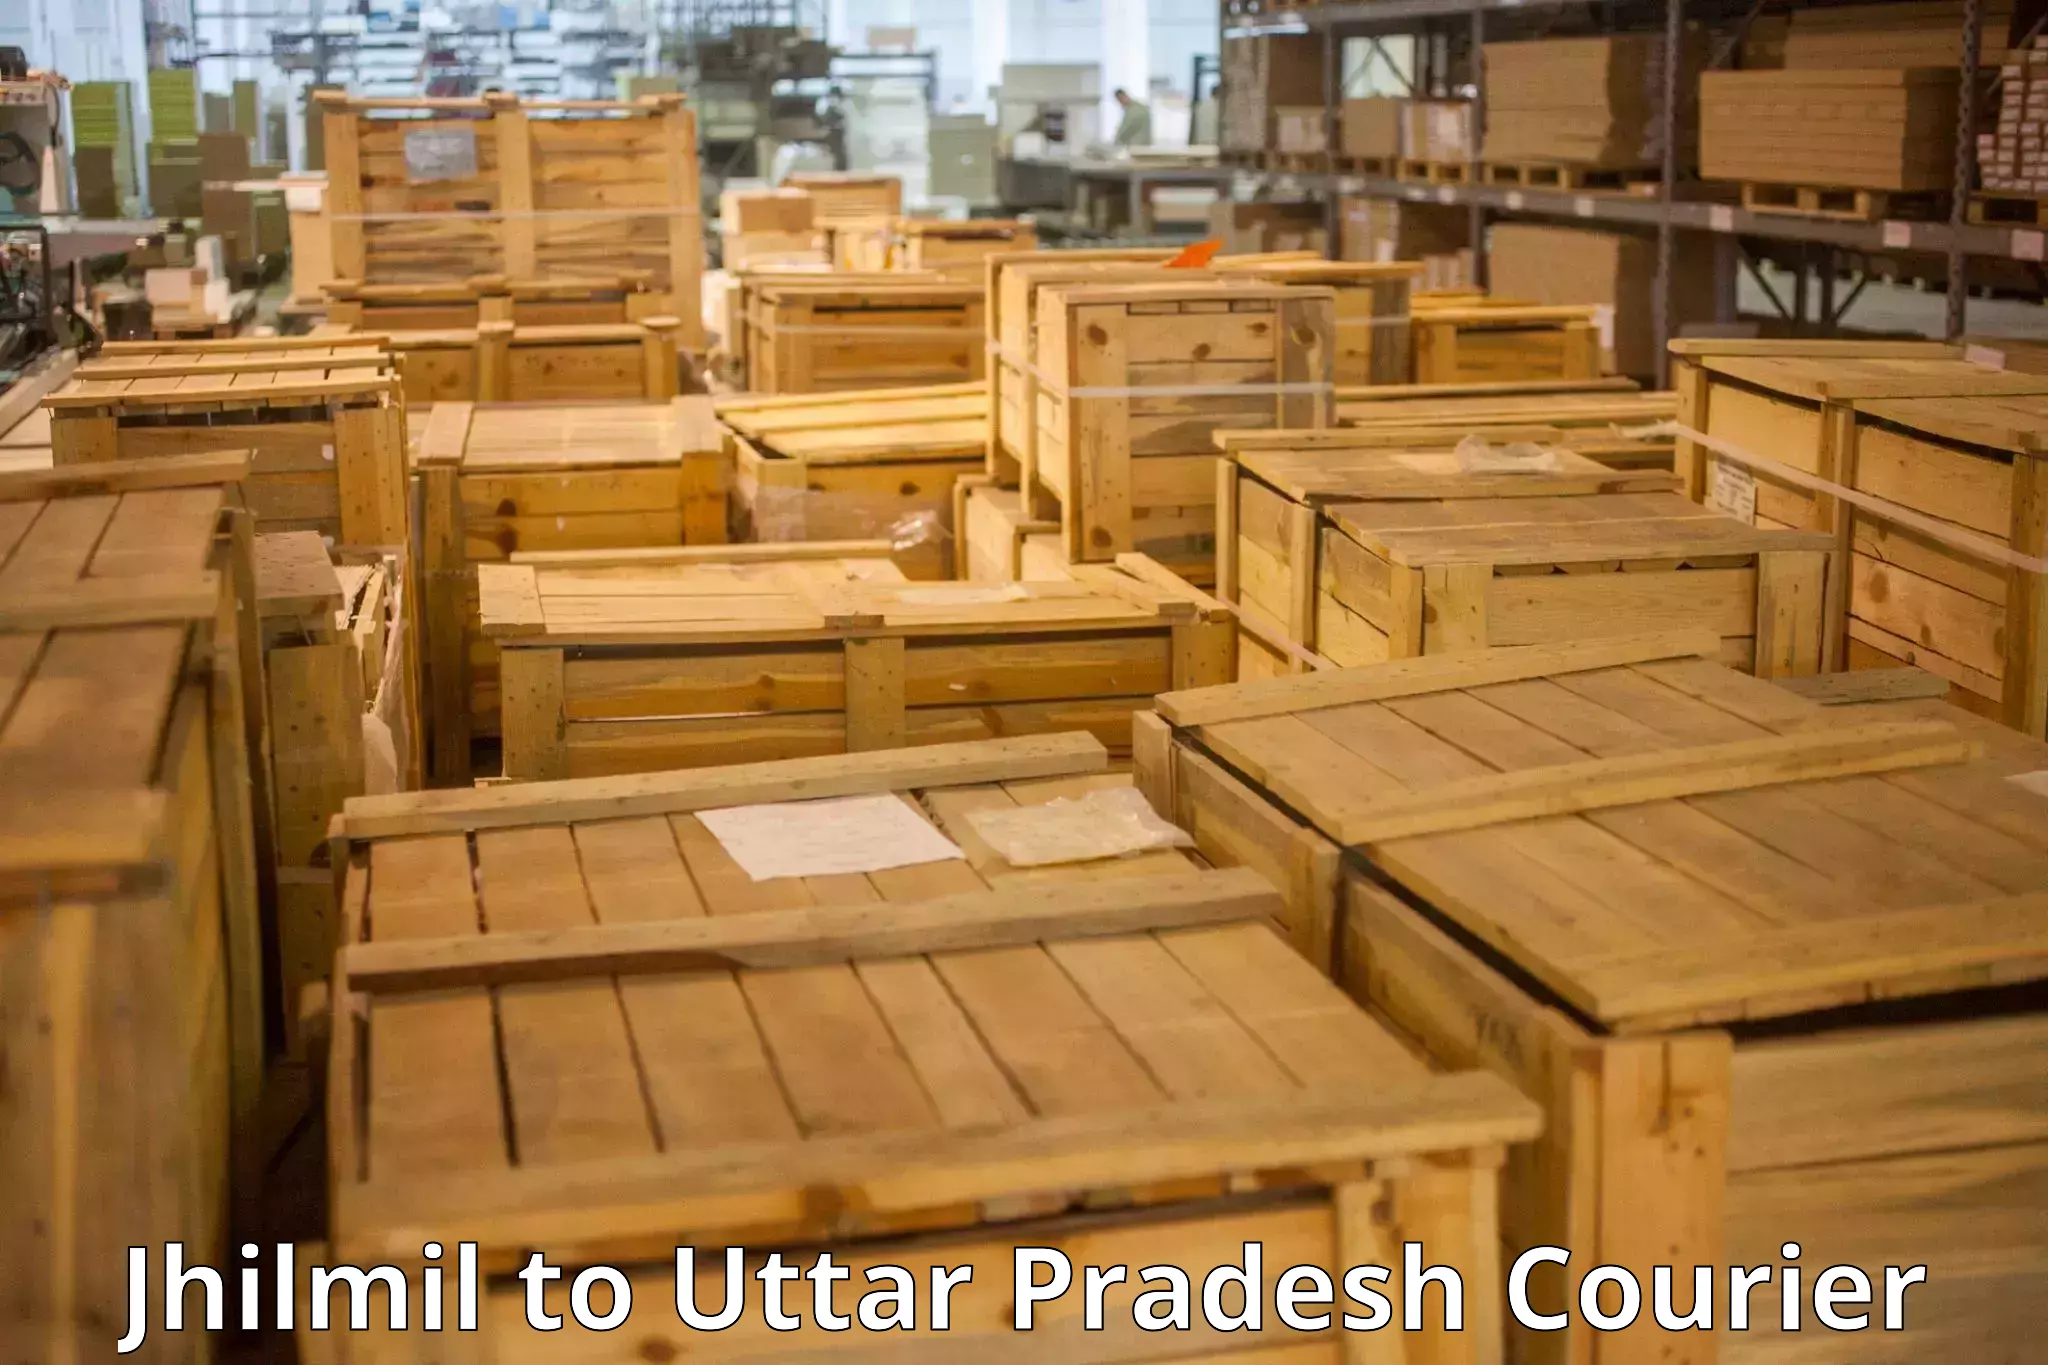 Luggage shipment processing Jhilmil to Aligarh Muslim University